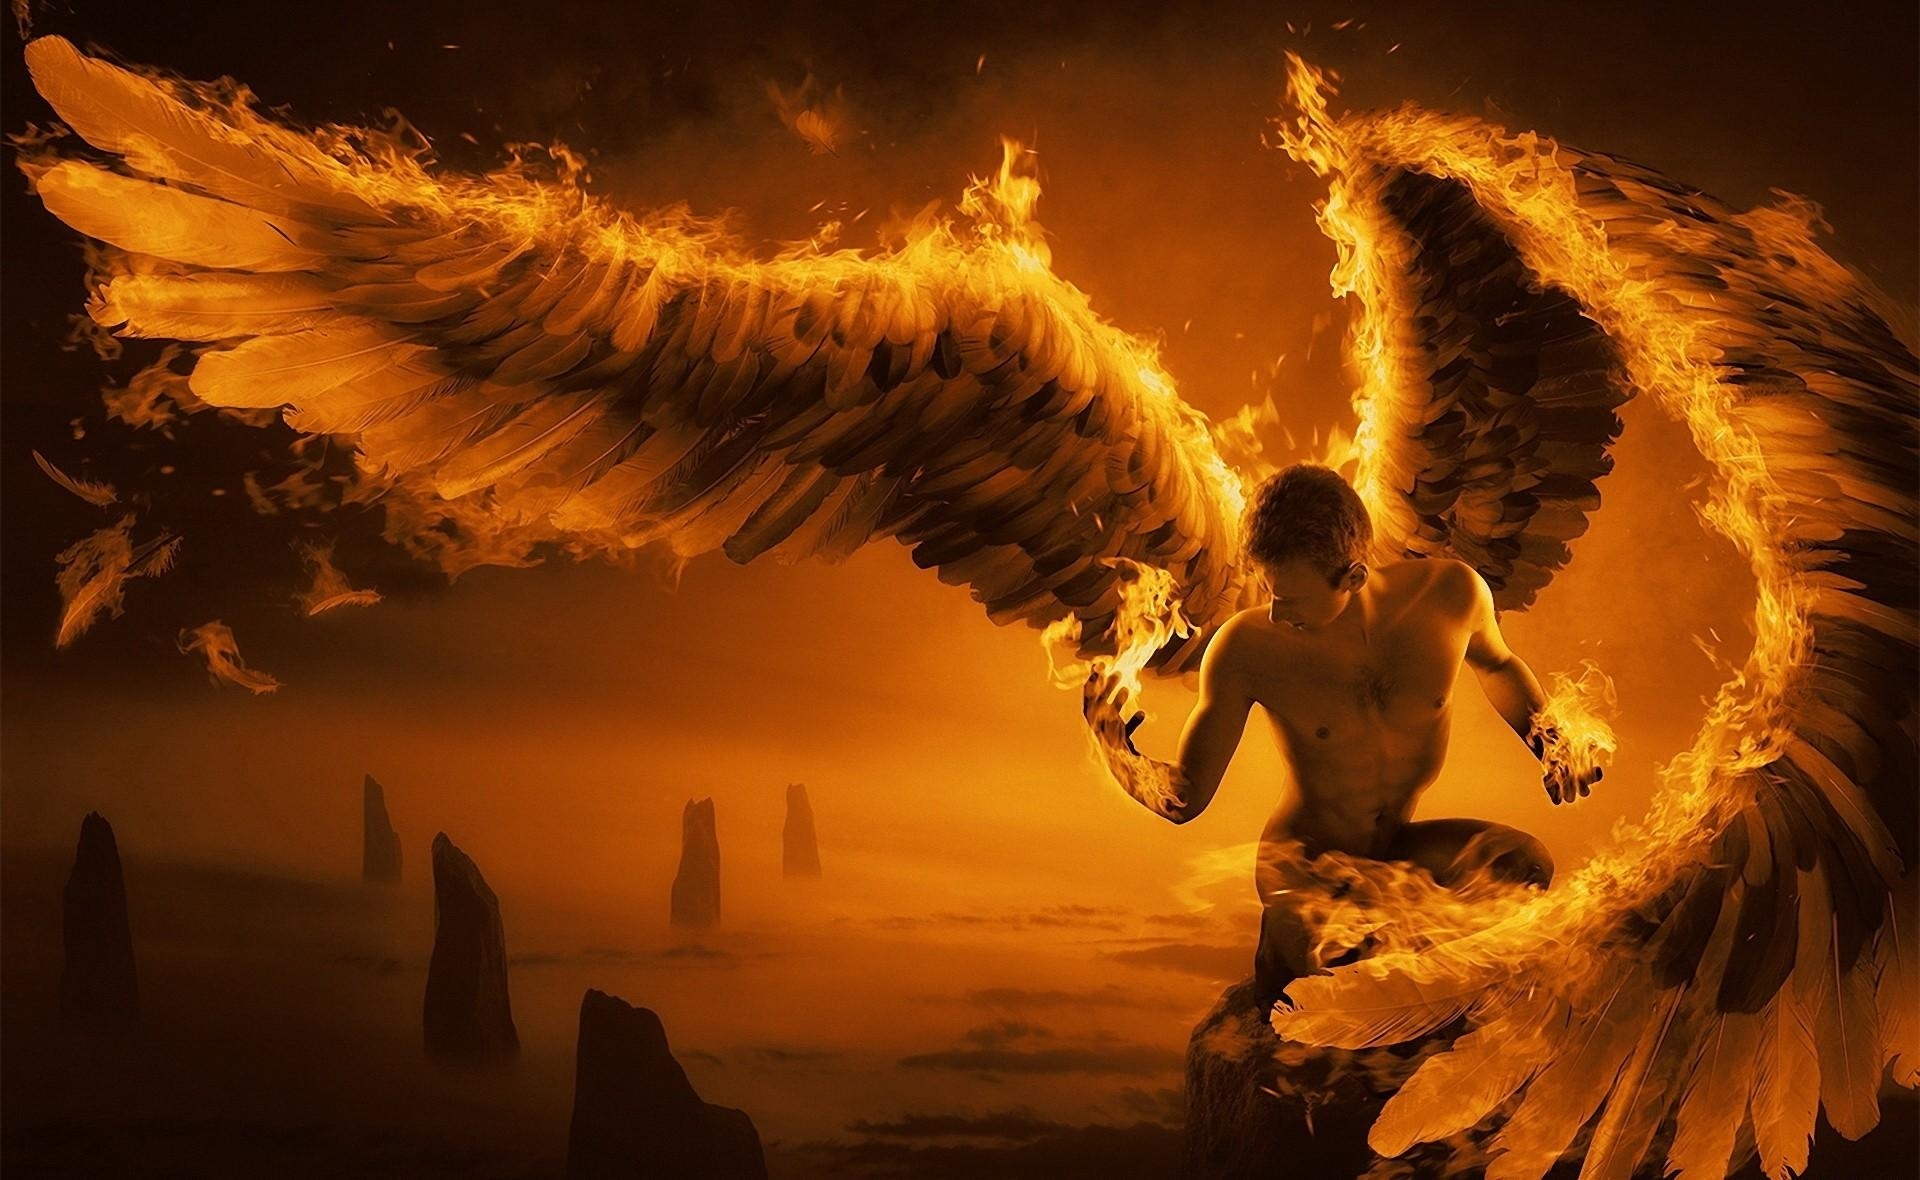 Fantasy Dark Angel Fire Flames Fallen Hell Demon Satan Occult